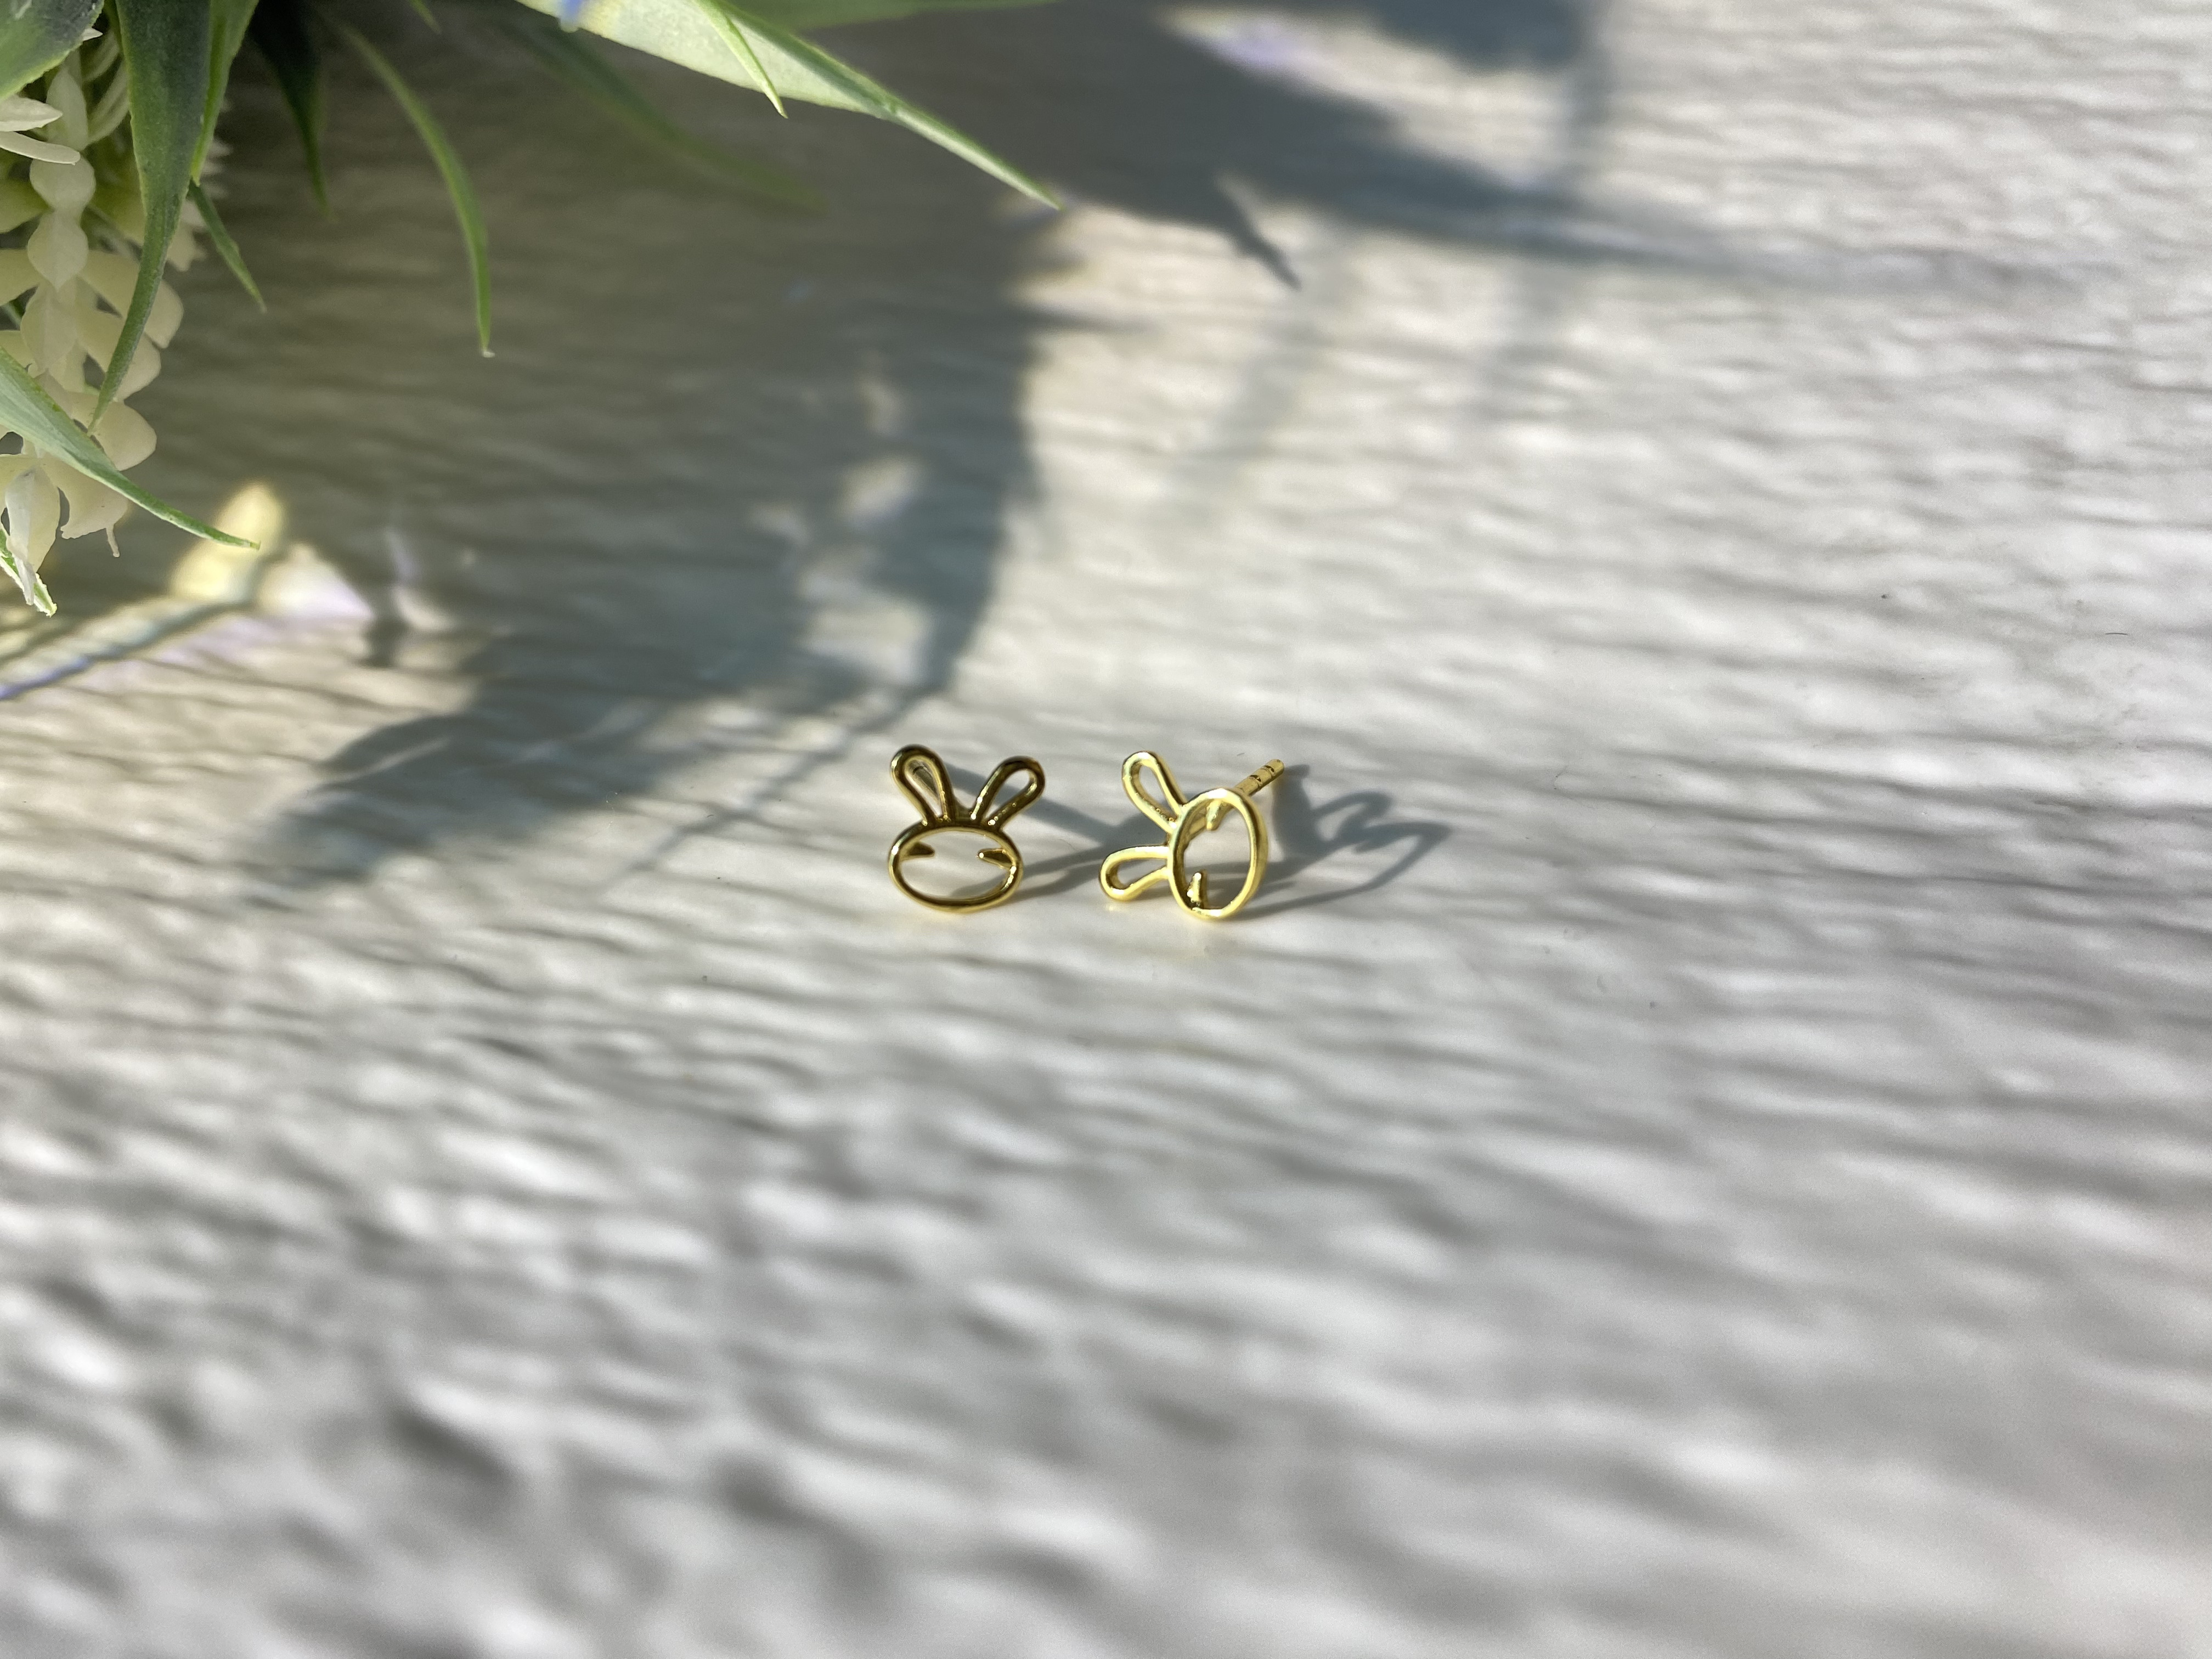 14k gold plated bunny stud earrings, cute stud earrings, minimal style